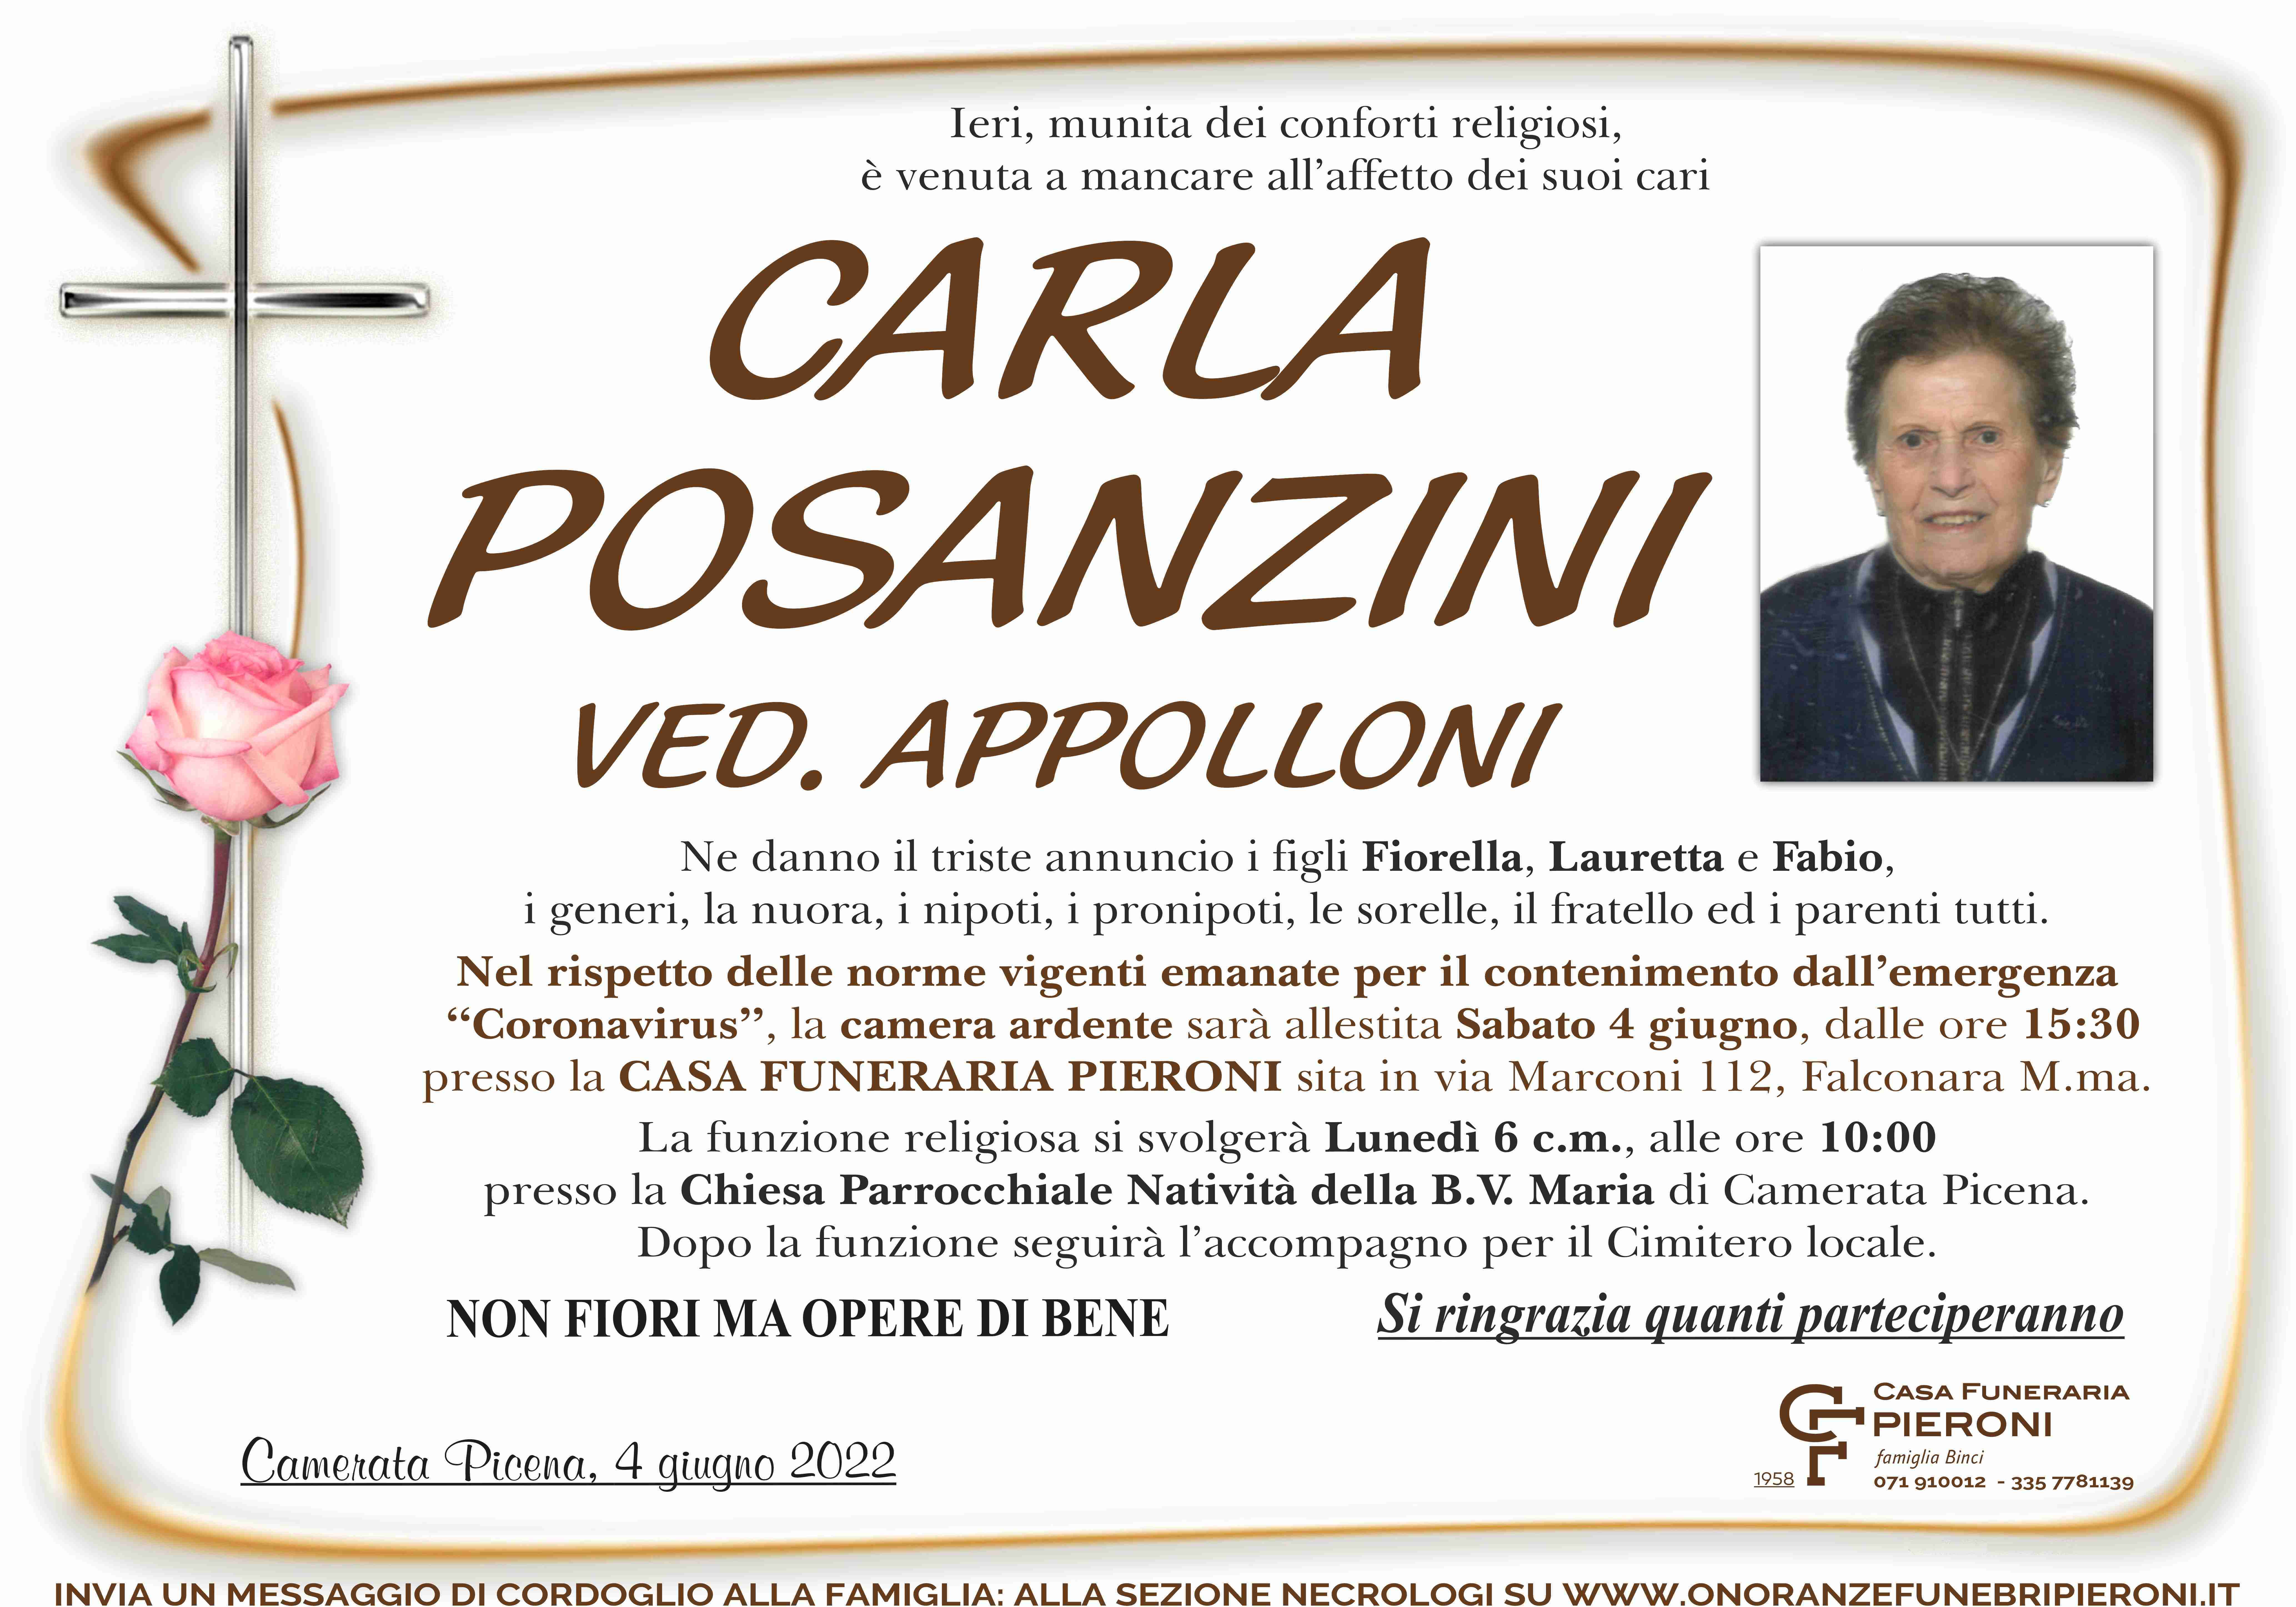 Carla Posanzini